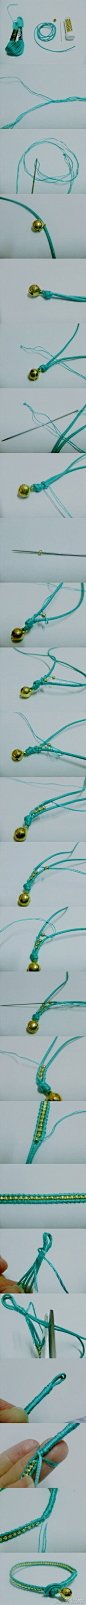 DIY编织手链装饰~各种类型，一定会有你喜欢的哦~ #编织# #纸艺# #布艺# #刺绣# #手工# #DIY# #旧物利用#